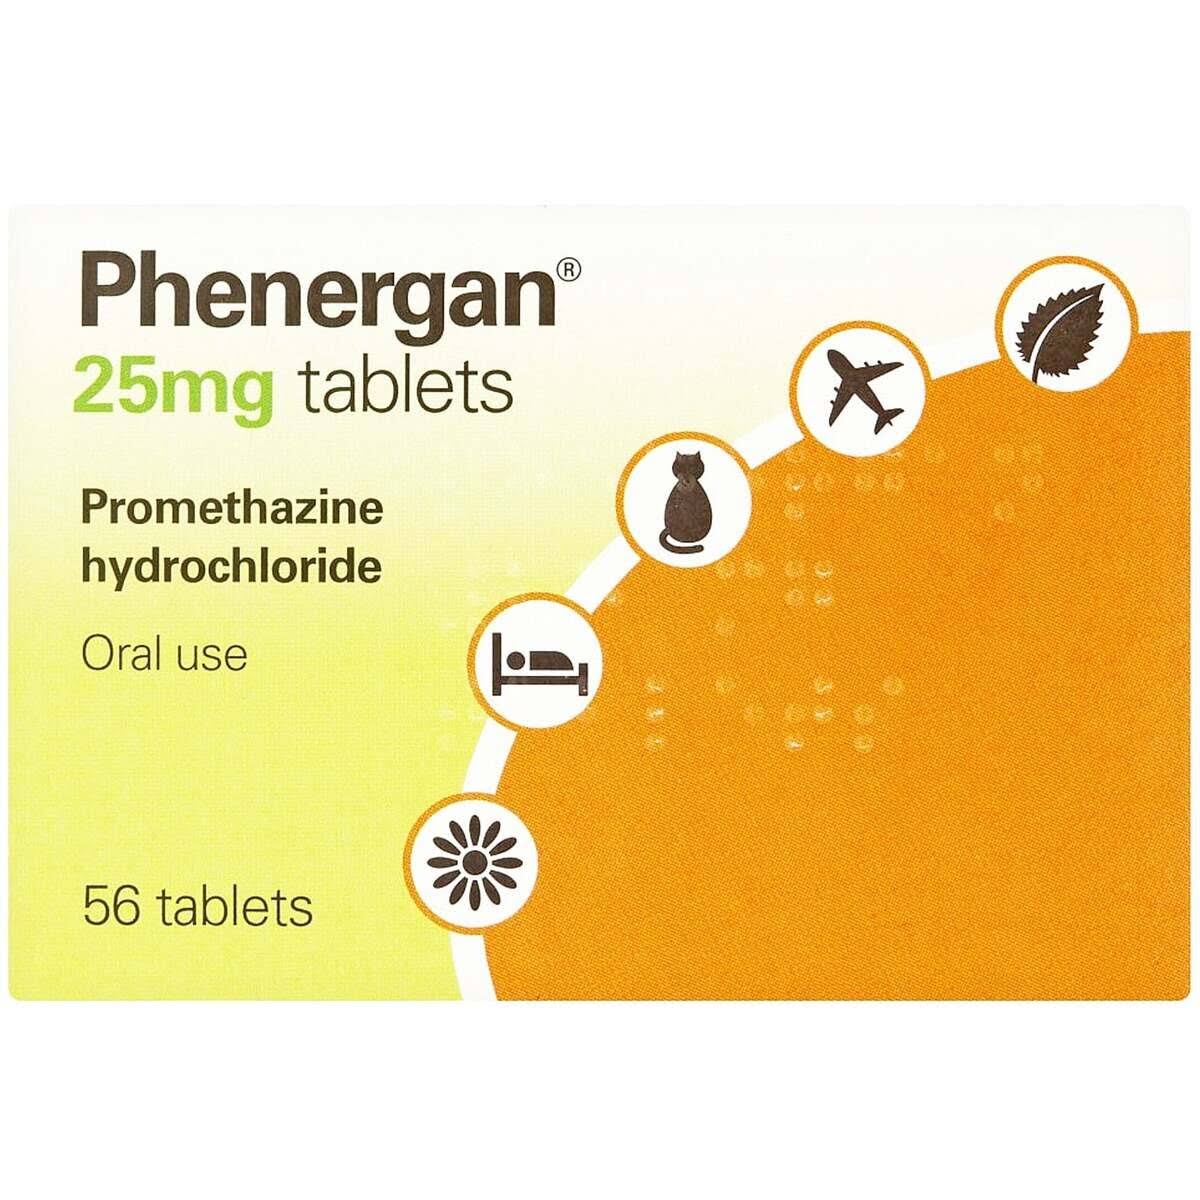 Phenergan Tablets - 25mg, 56ct